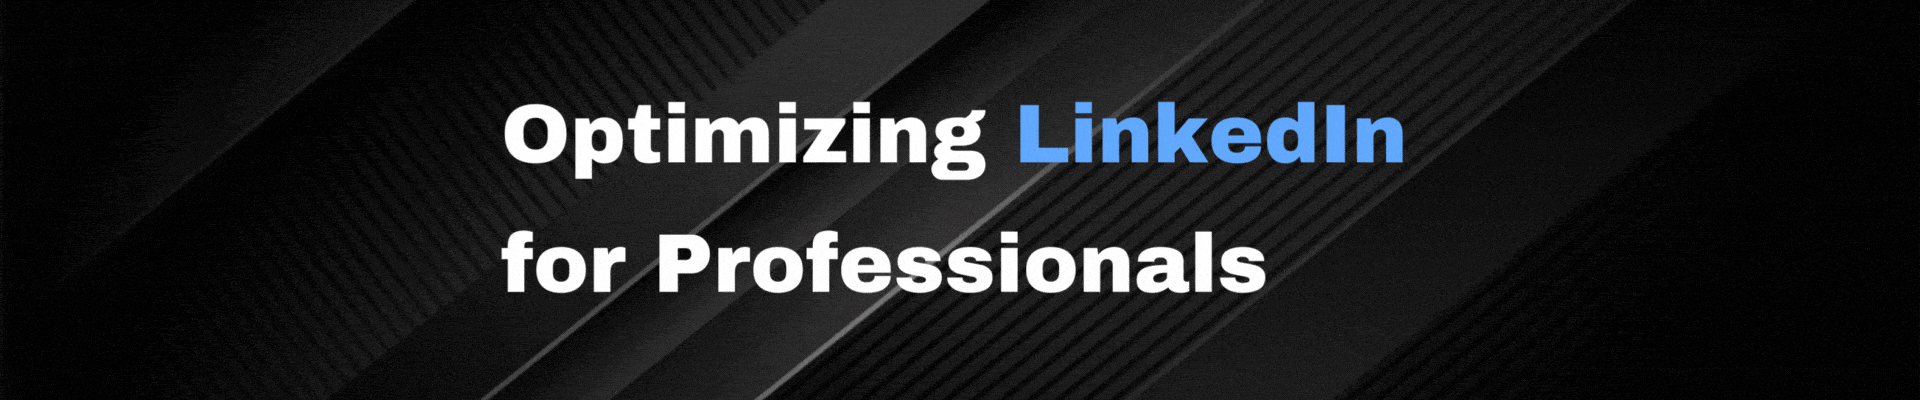 Optimizing LinkedIn for Professionals